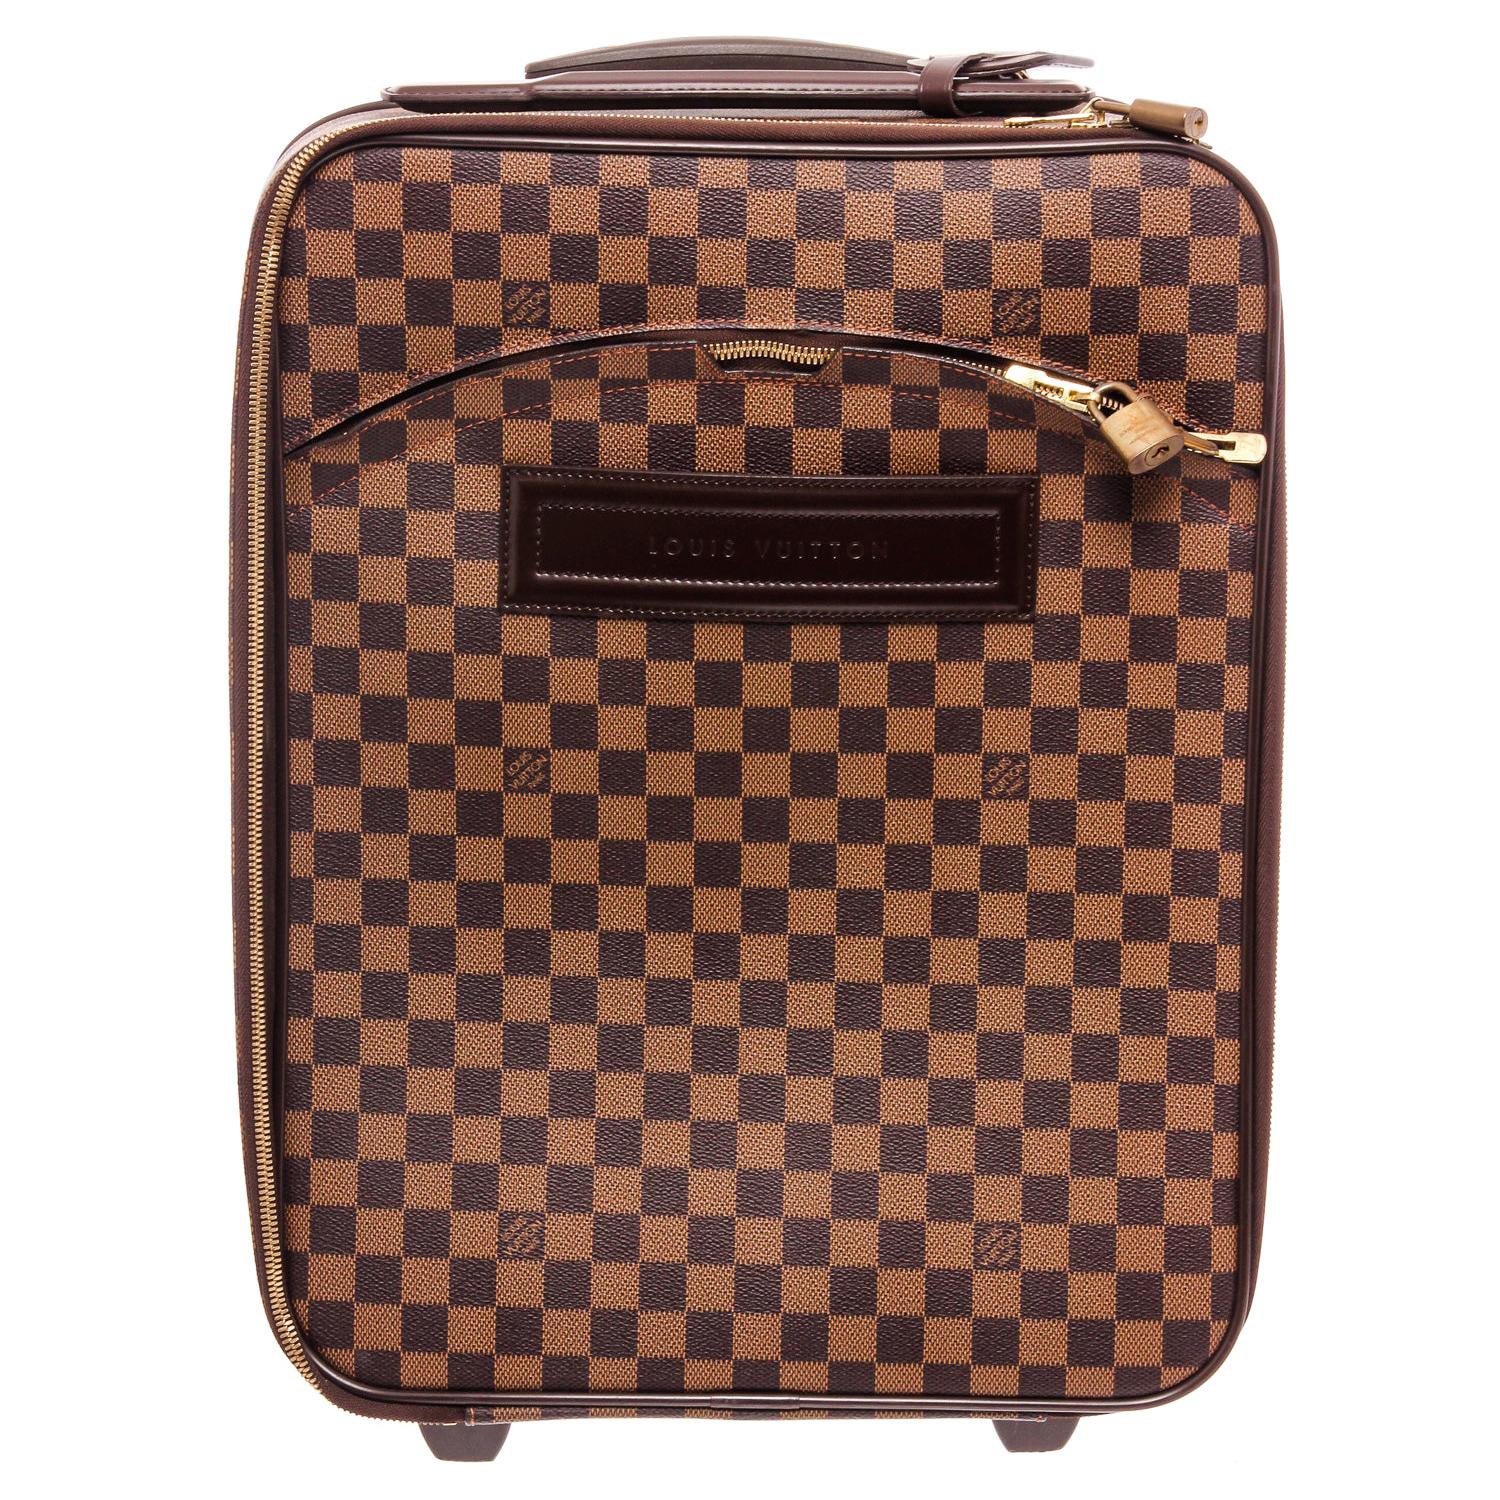 Louis Vuitton Damier Ebene Canvas Leather Pegase 45 cm Luggage